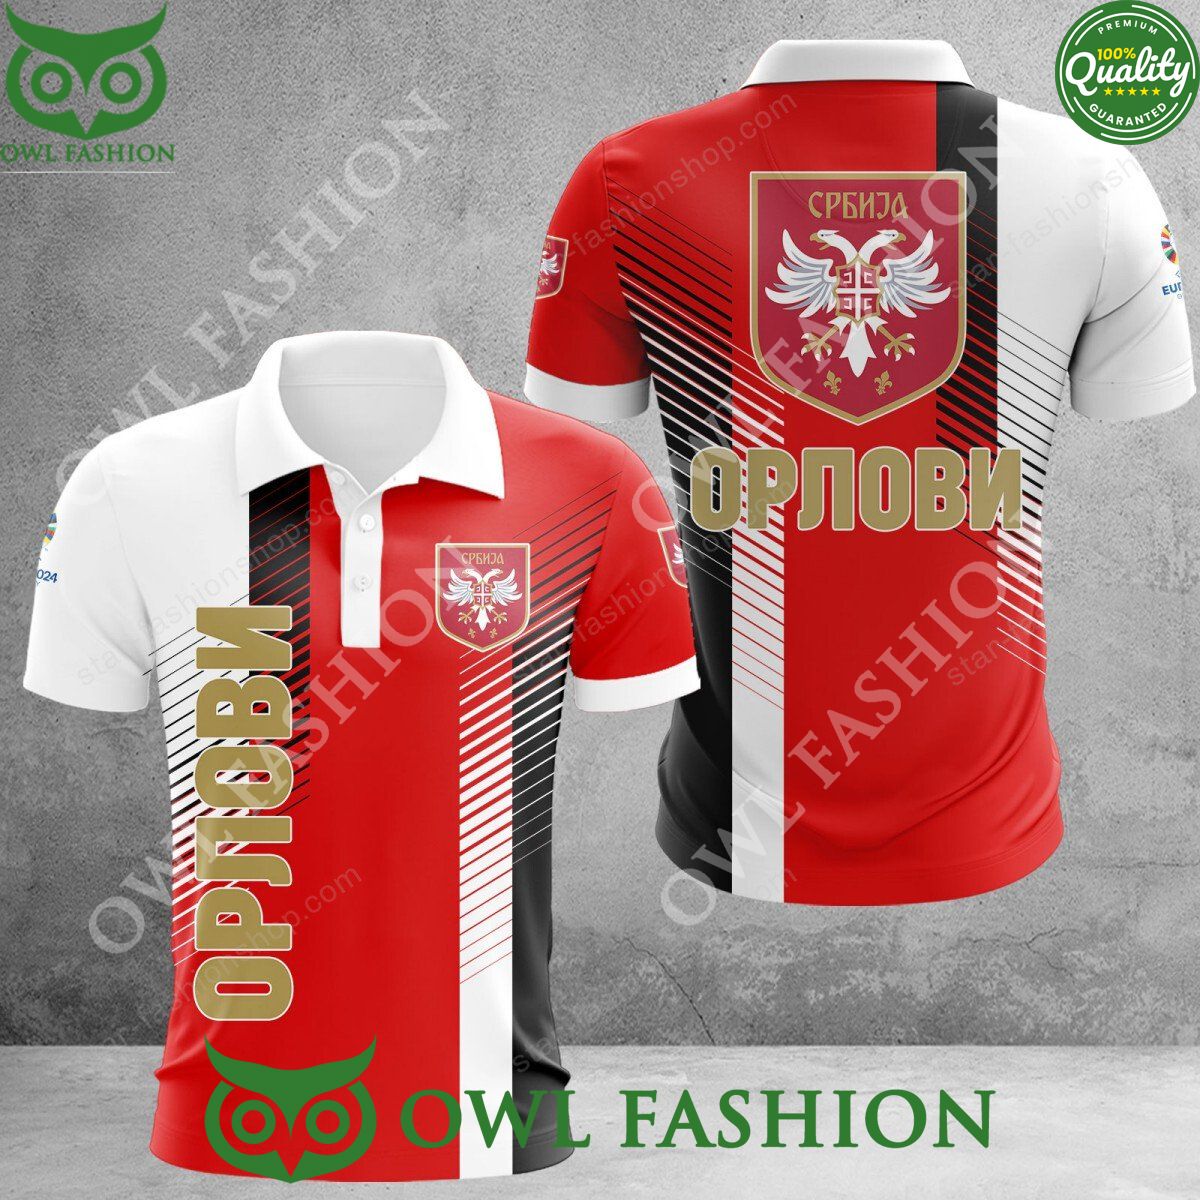 serbia national football team logo black red white 3d shirt printed 1 VKfGY.jpg